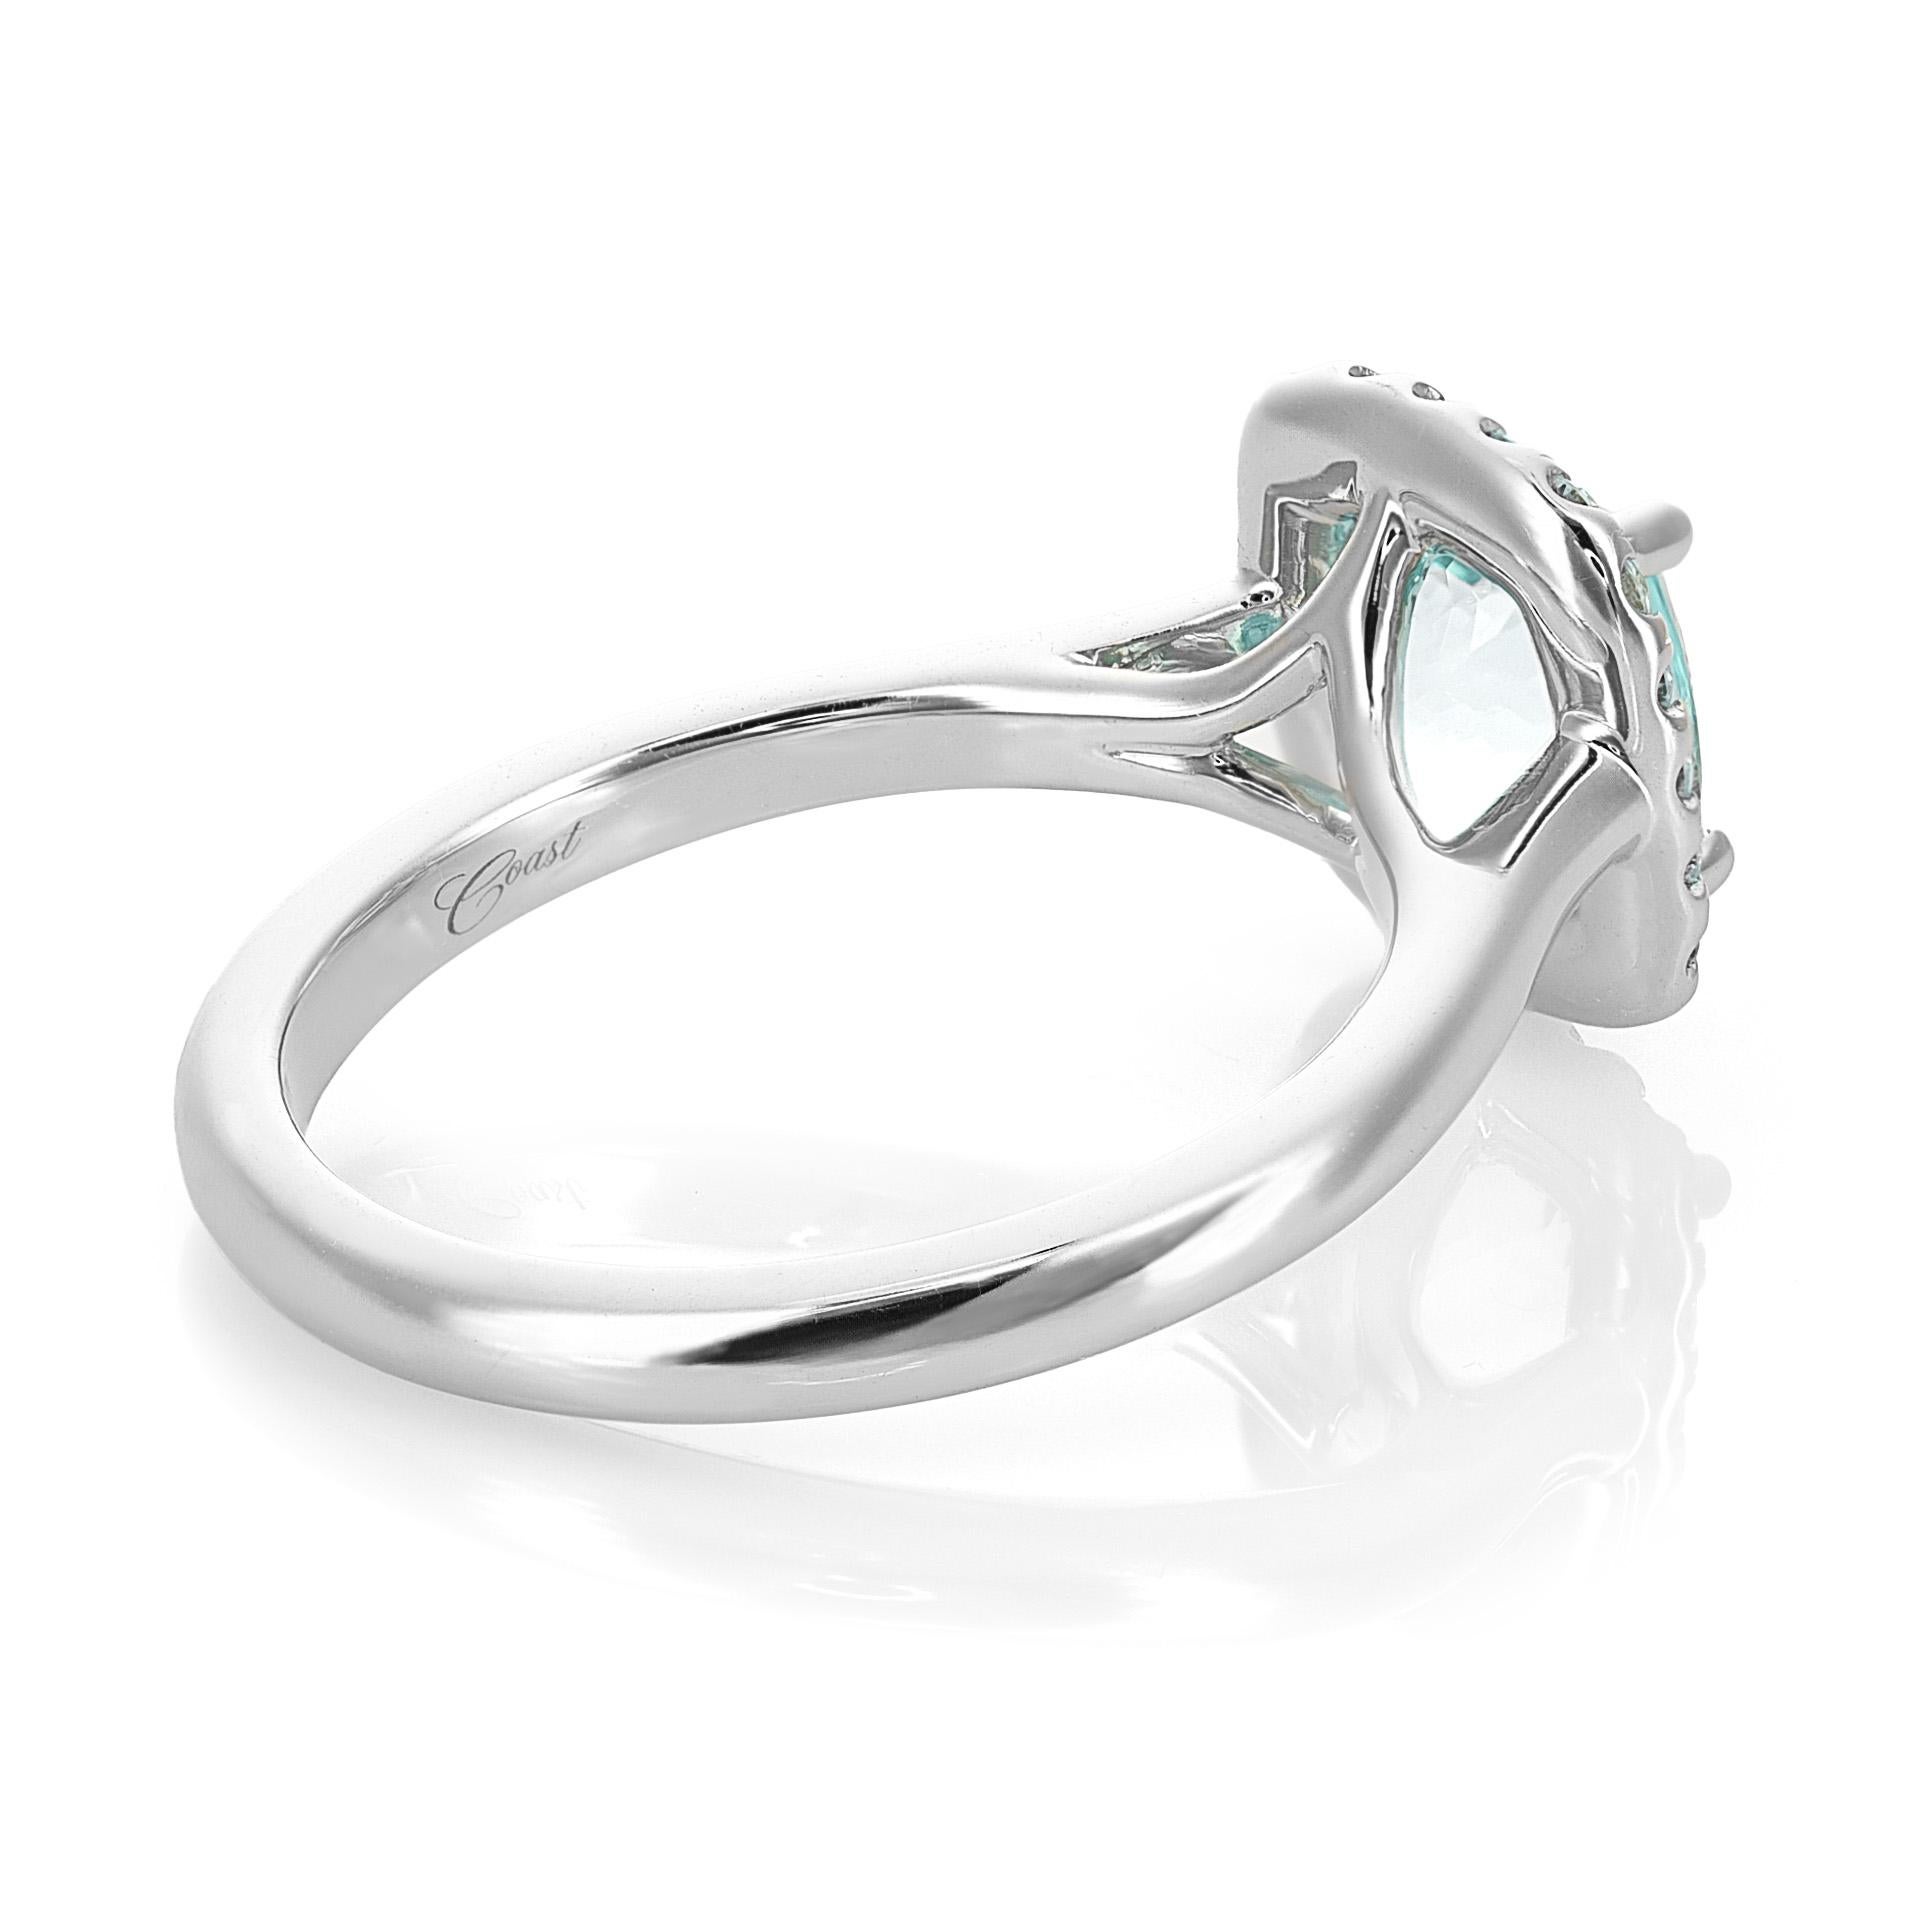 Mixed Cut 1.90 Carats Paraiba Tourmaline Diamonds set in 14K White Gold Ring For Sale